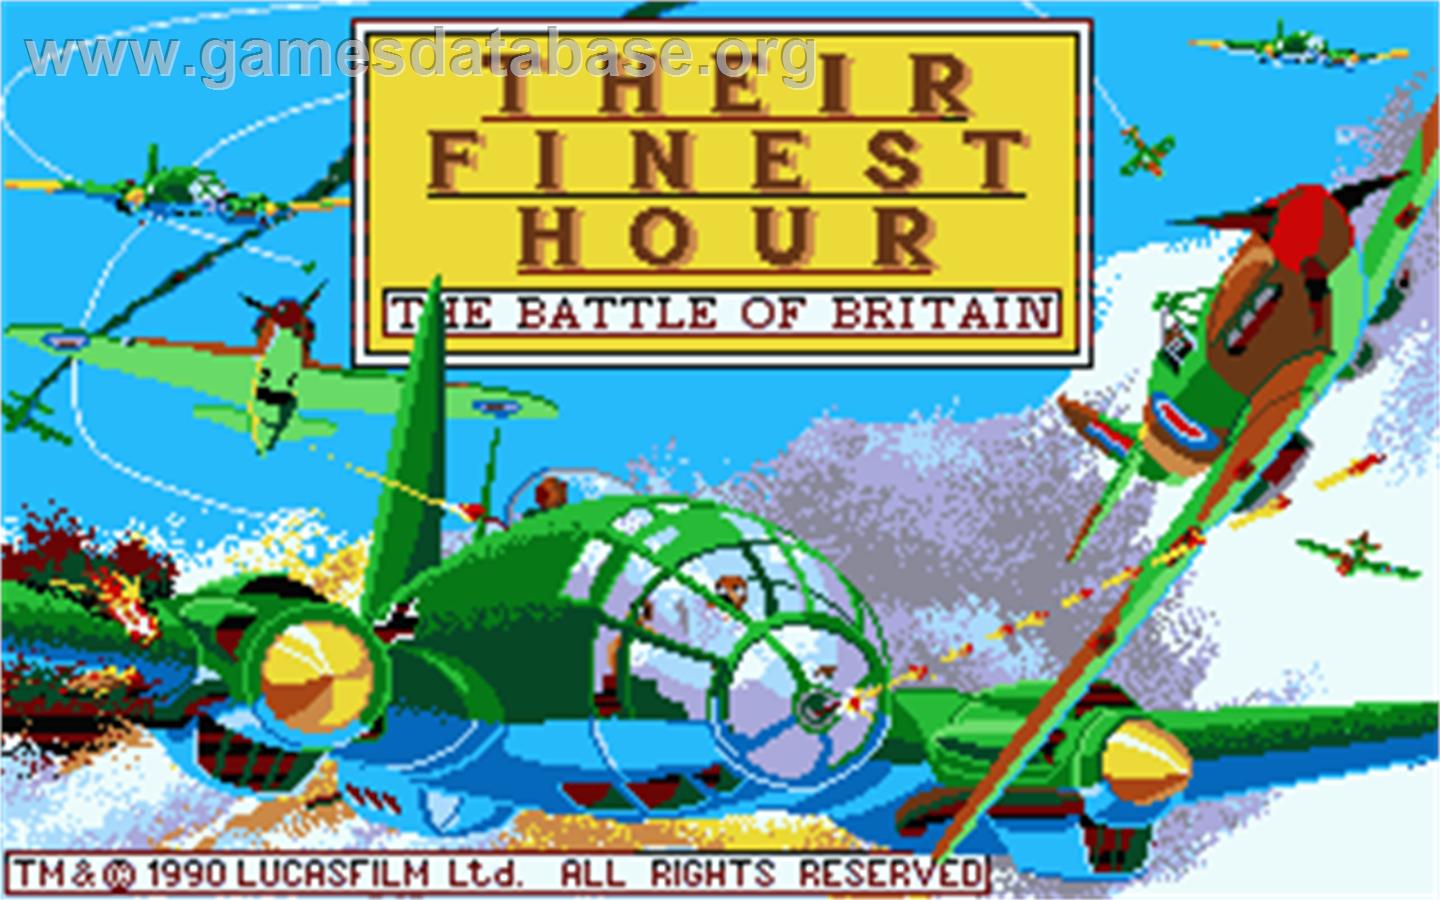 Their Finest Hour: The Battle of Britain - Atari ST - Artwork - Title Screen